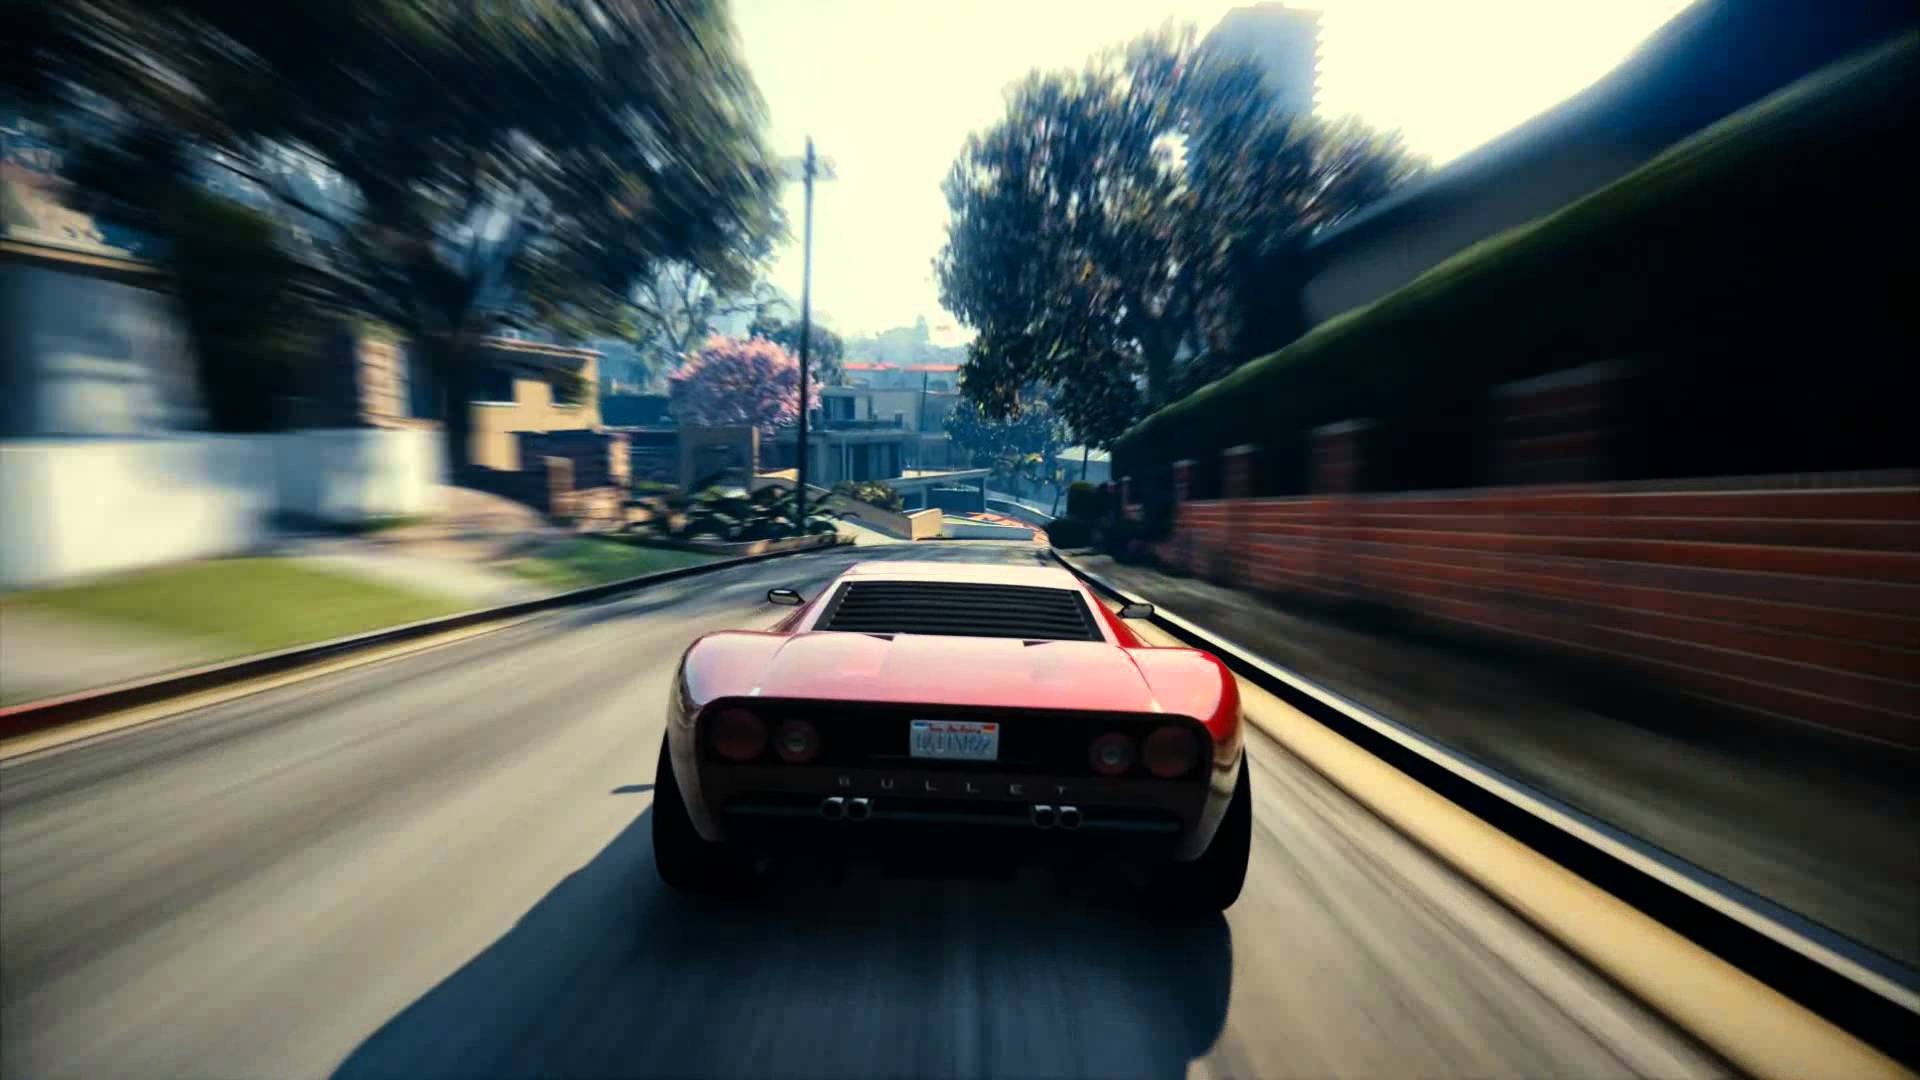 GTA 5 - Motion Blur Test - YouTube